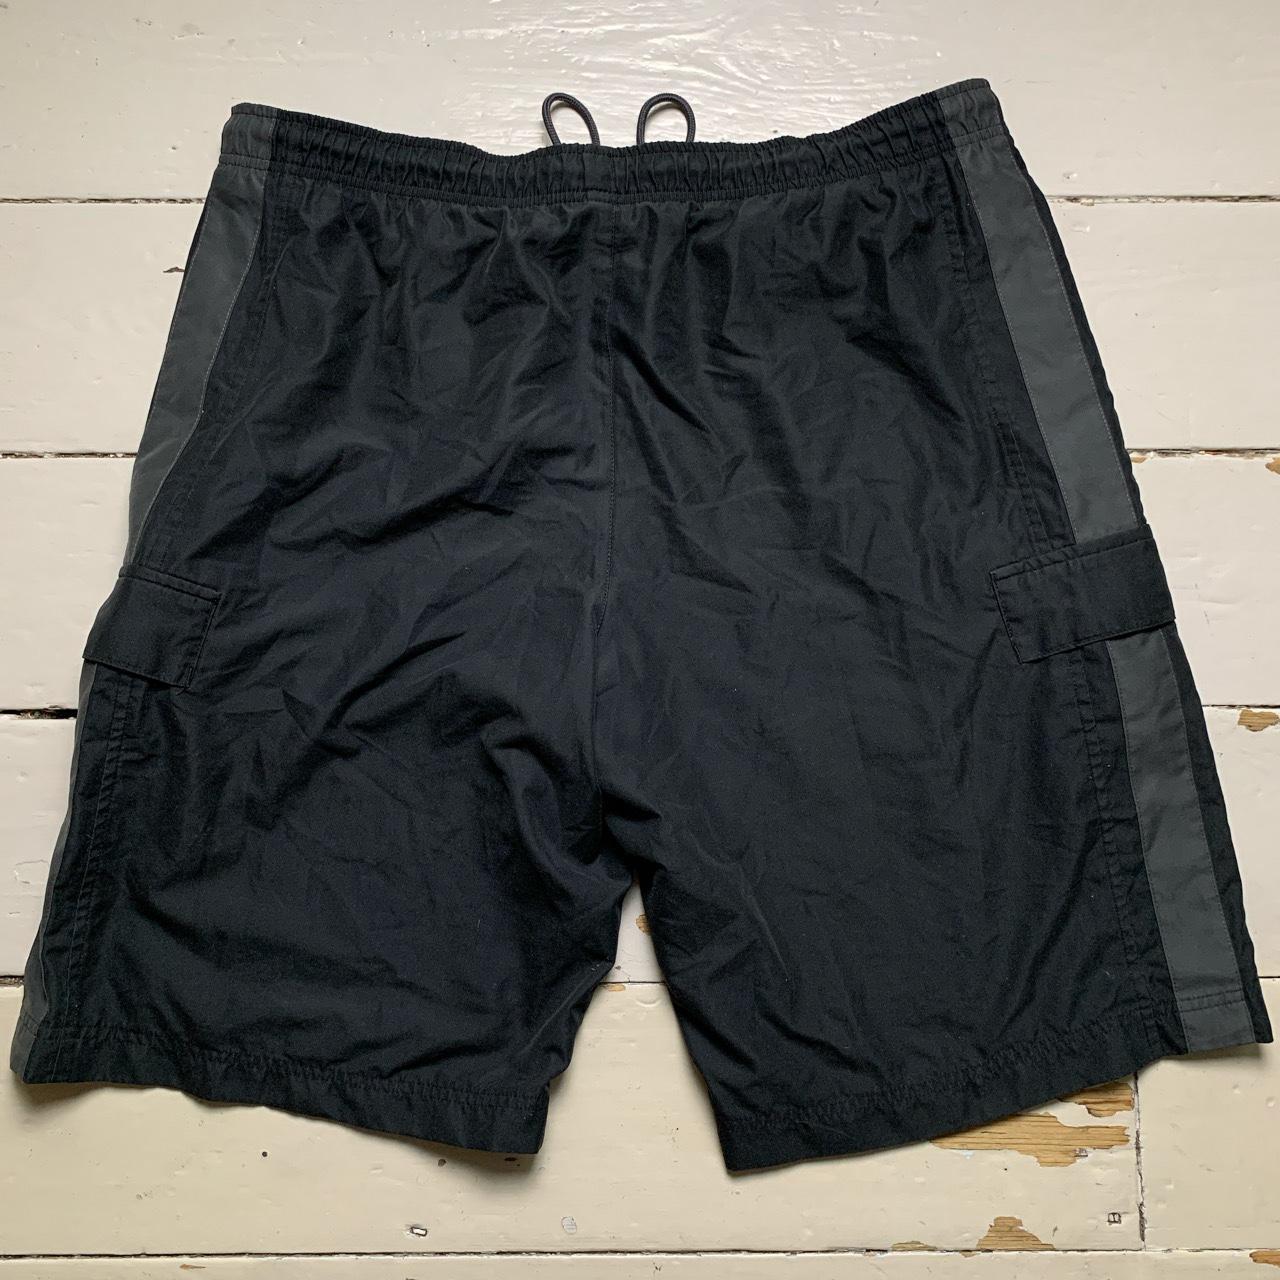 Nike Vintage Cargo Shell Shorts Black and Grey Swoosh